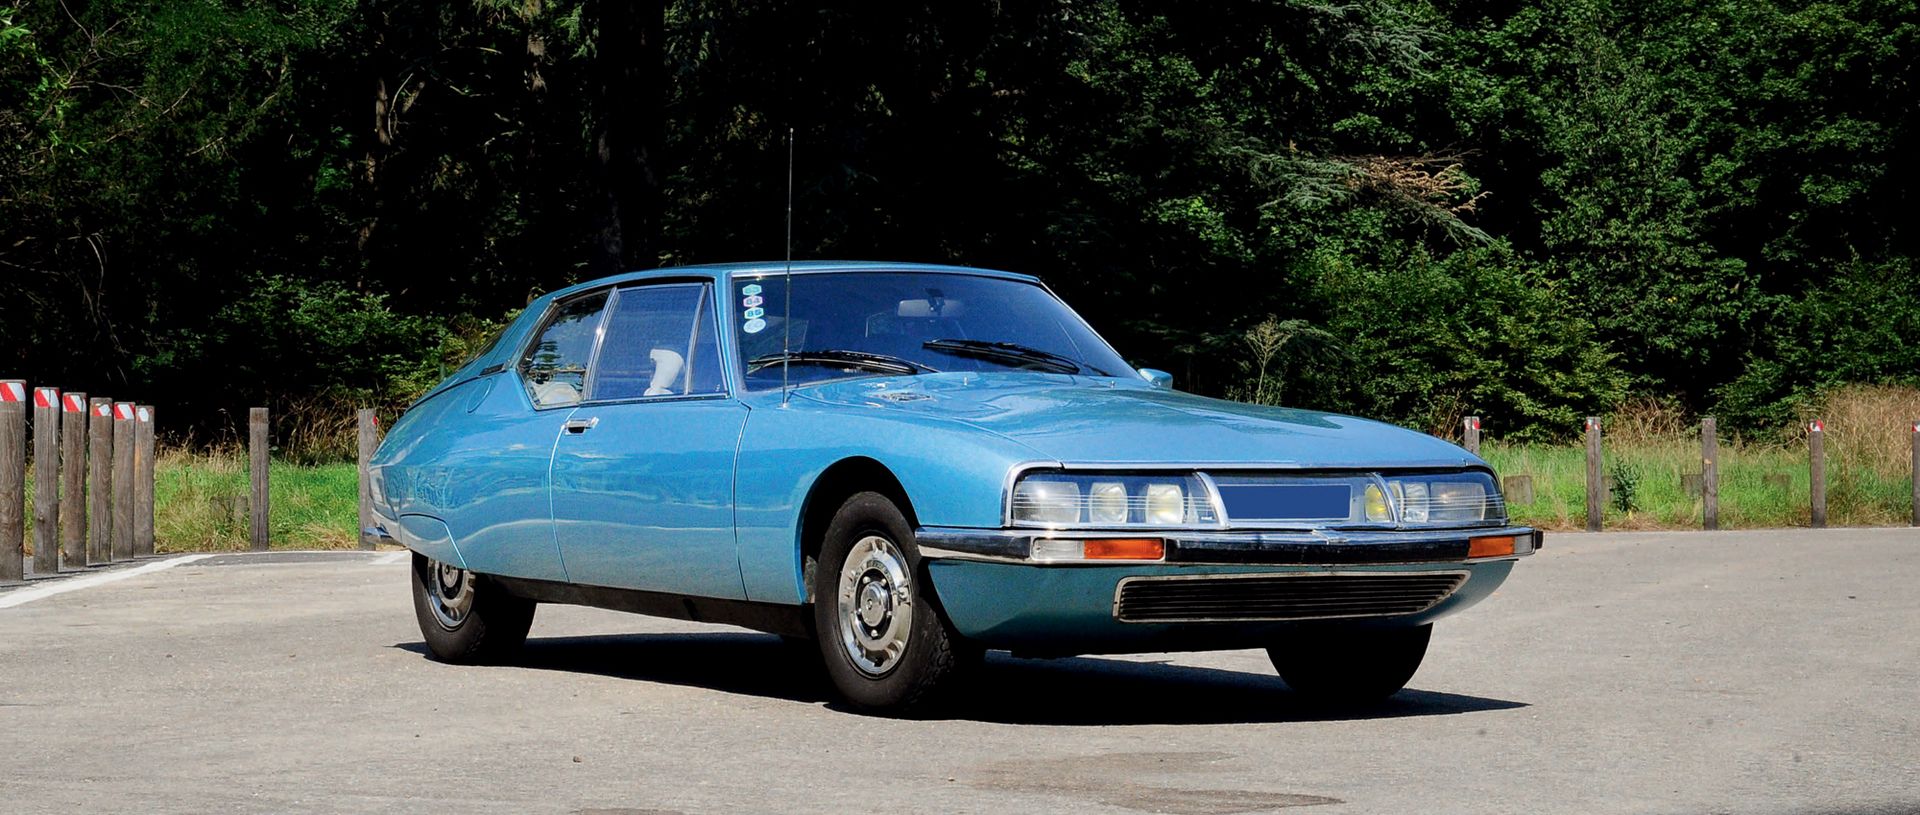 1971 Citroën SM 
别致而罕见的配置

严格意义上的原装内饰

20世纪70年代的象征性汽车



法国注册

底盘编号：SB1131



在2&hellip;